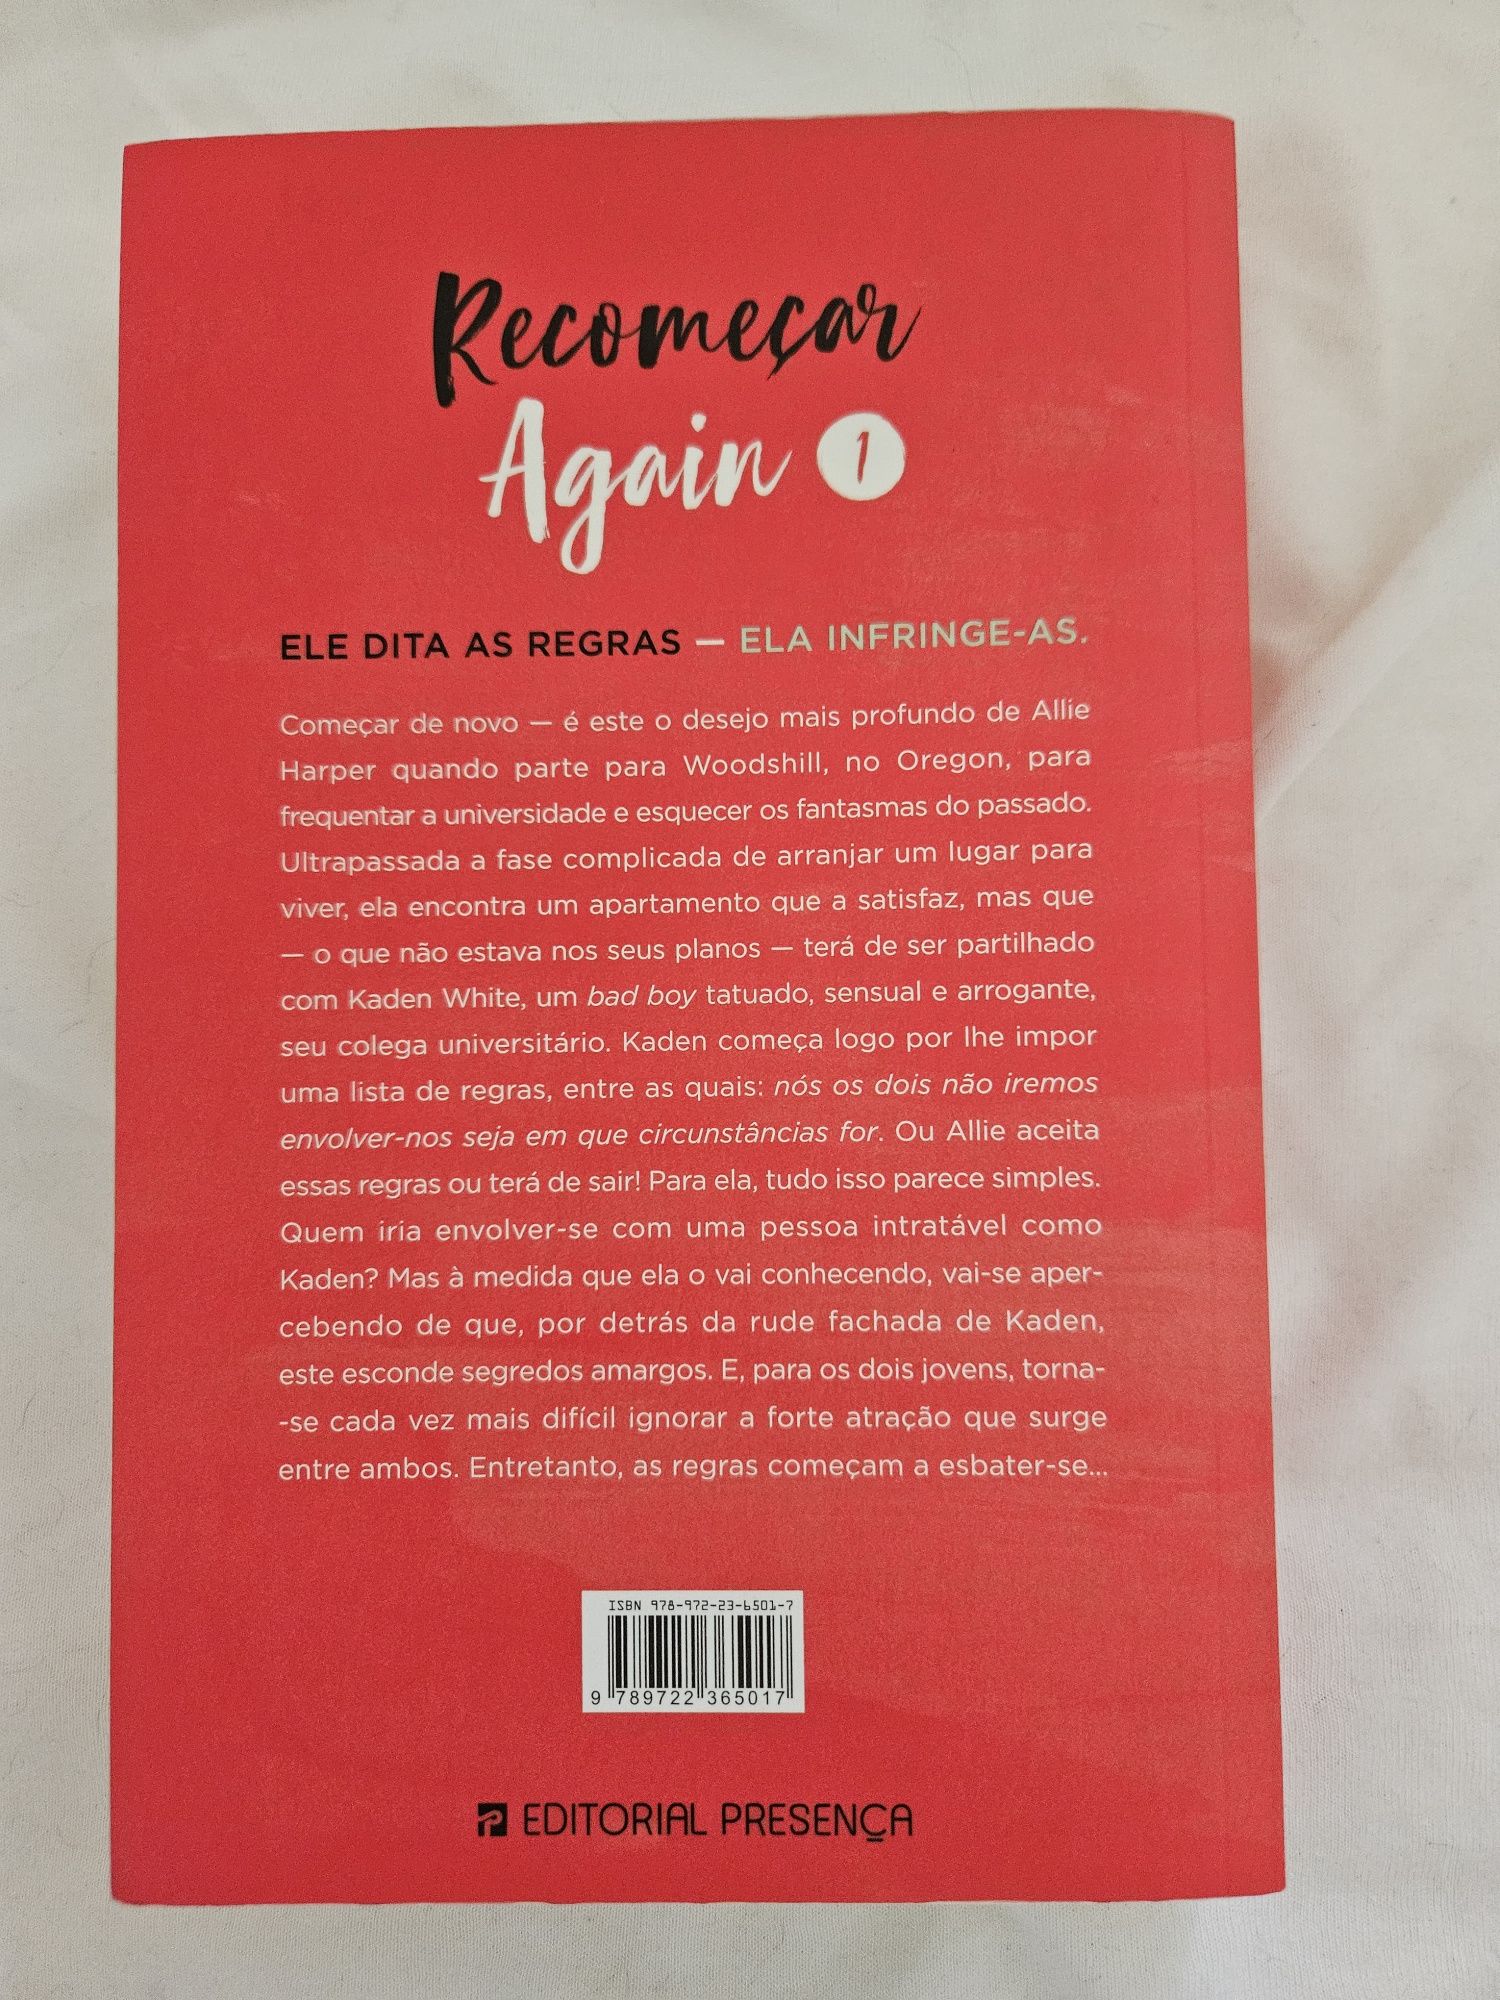 Livro "Recomeçar - again" de Mona Kasten